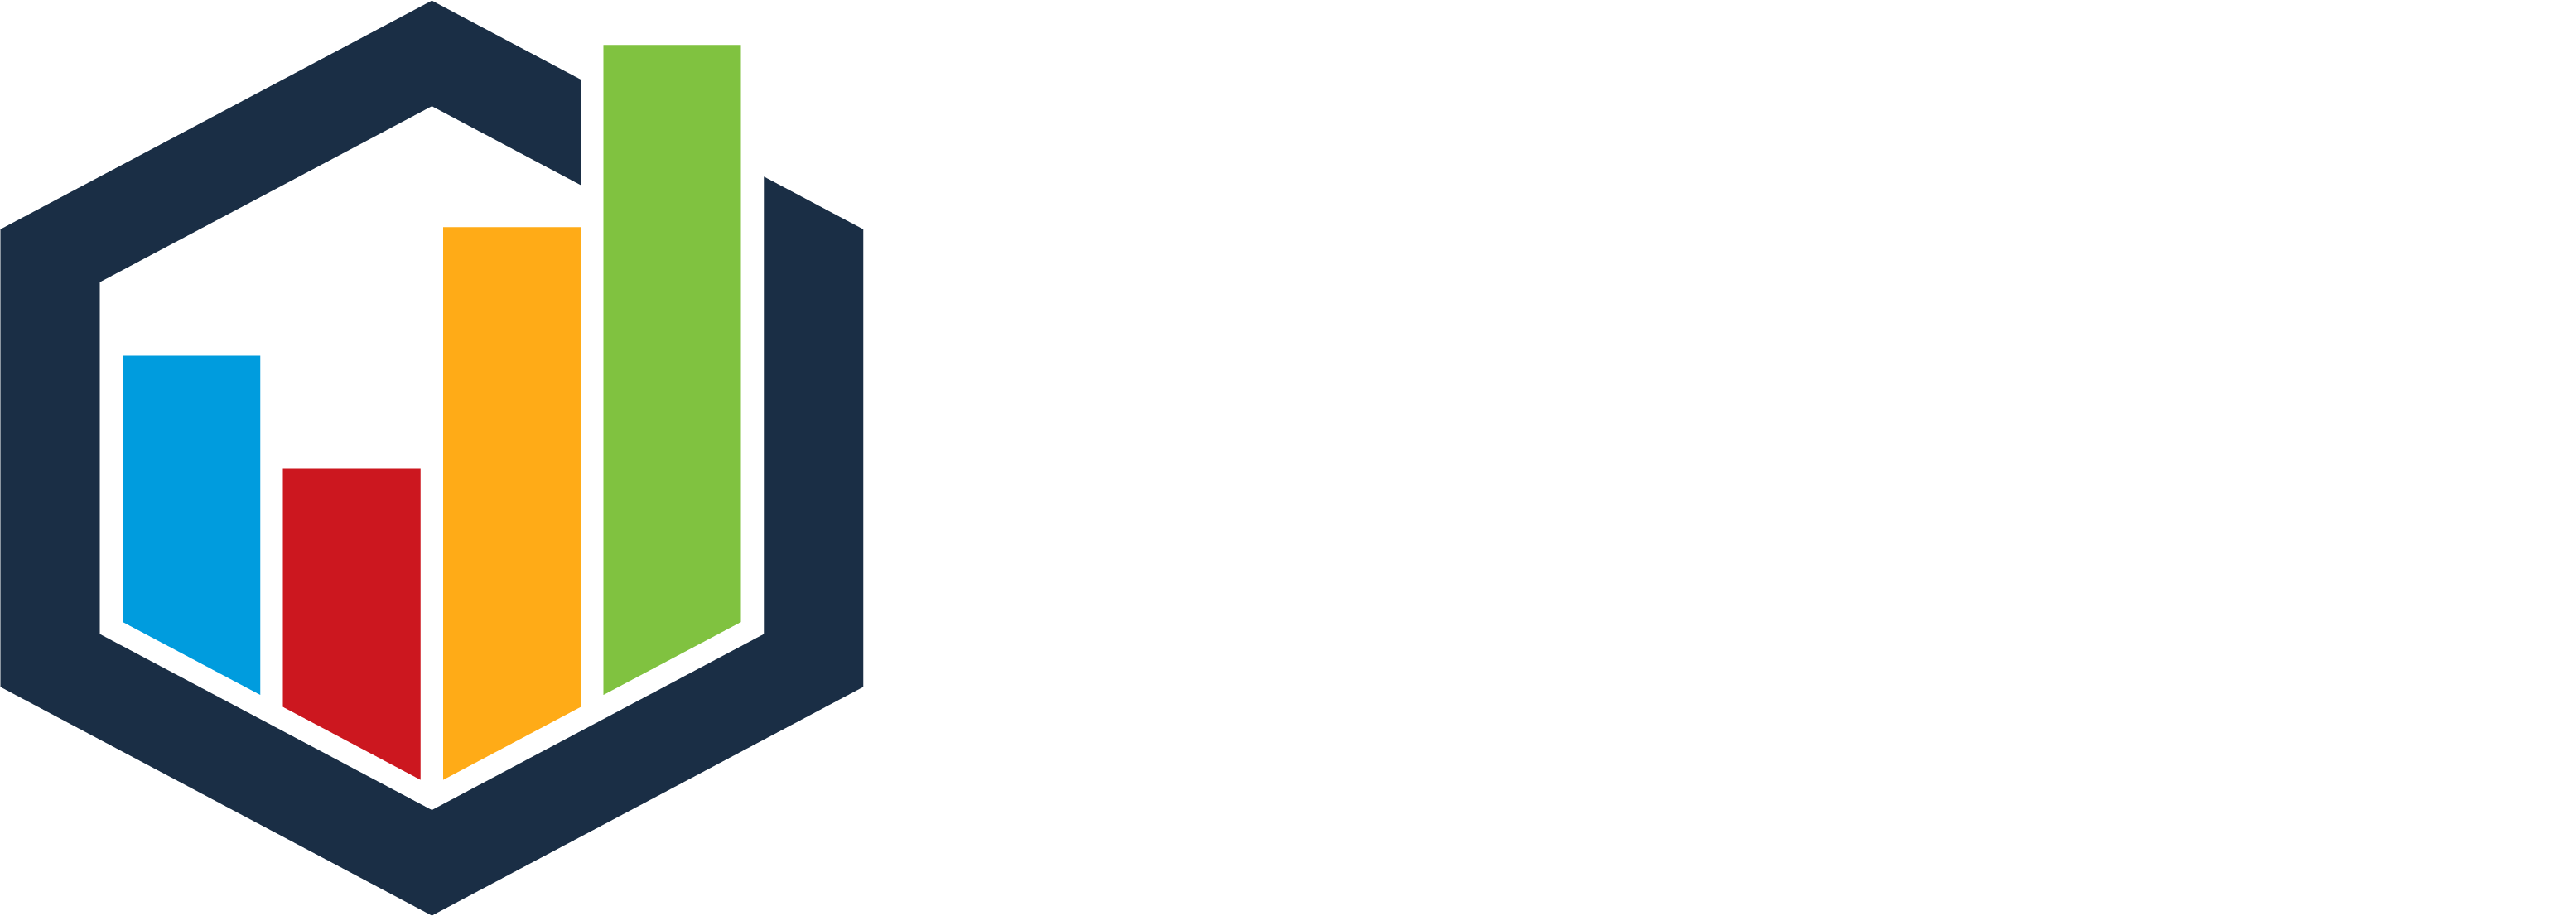 Xuvi - Data Analysis (3110x1106)